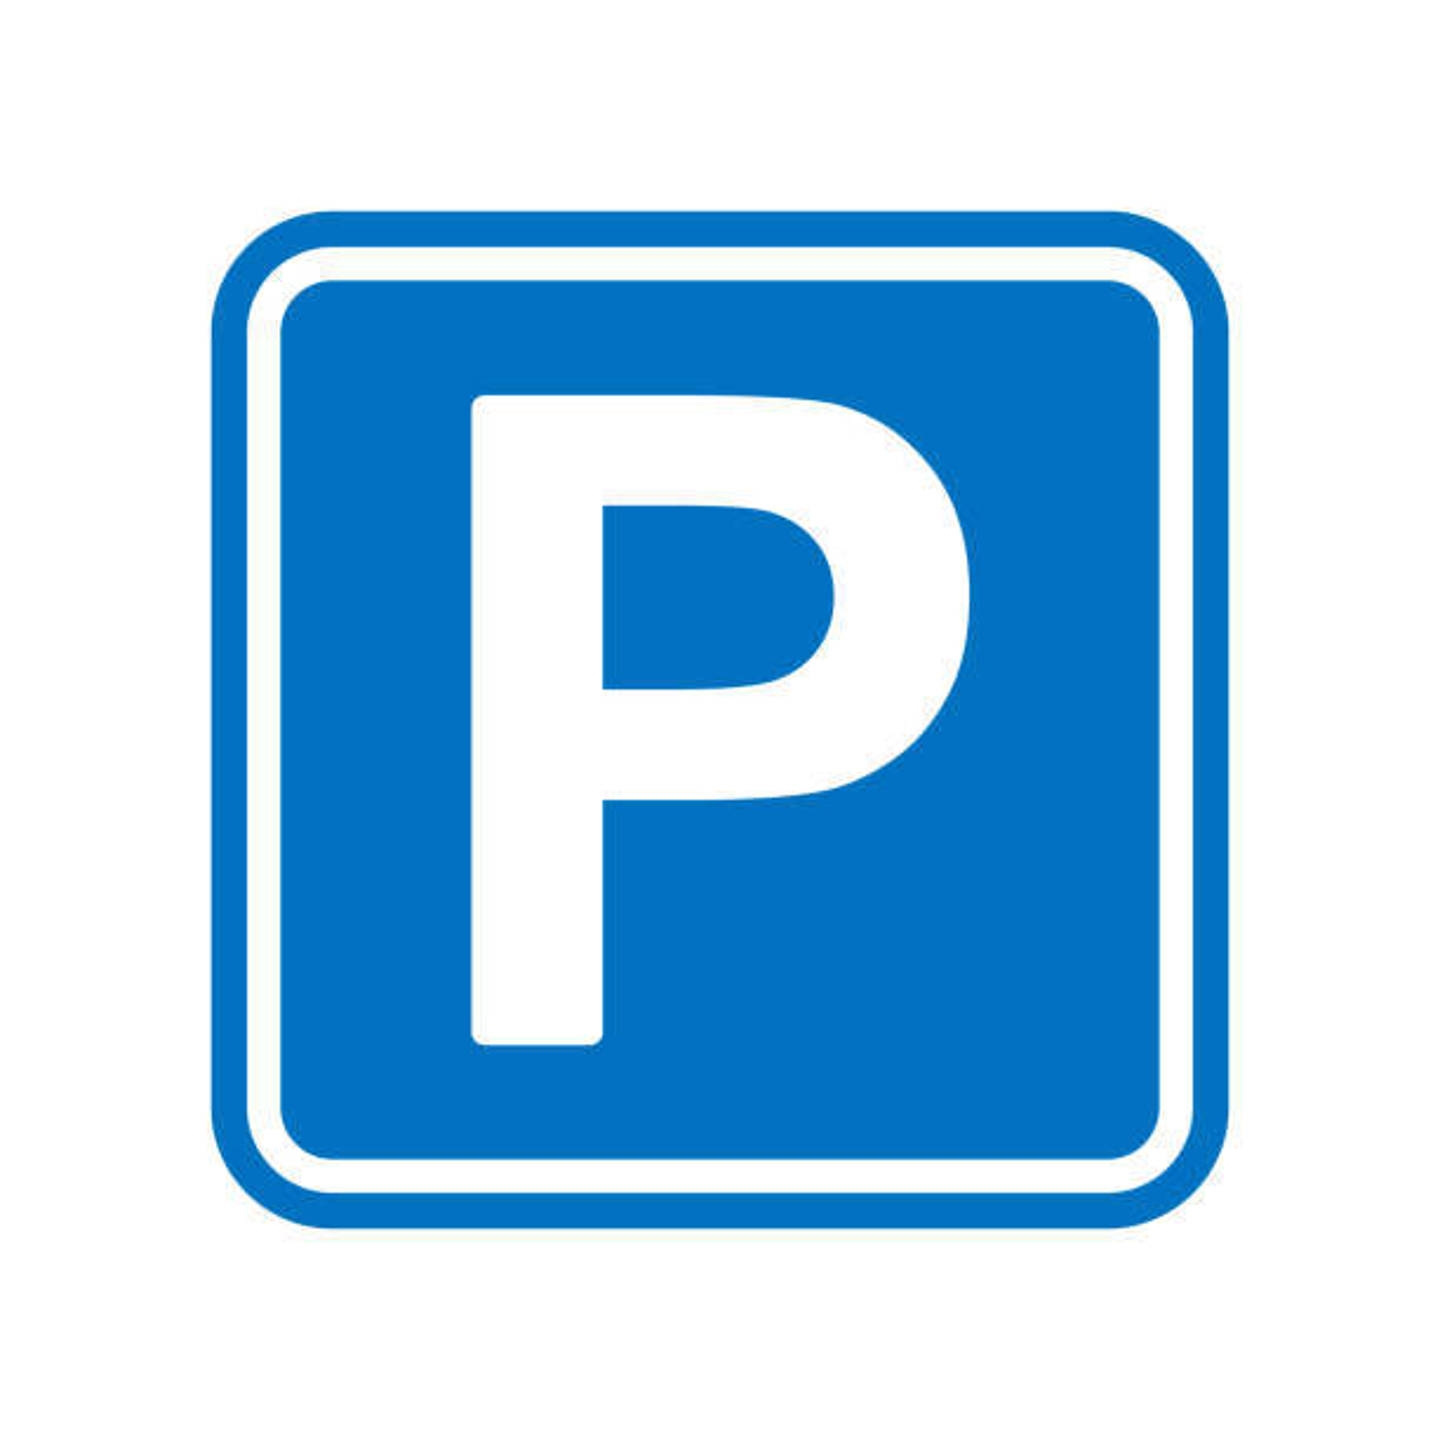 Parking & garage te  koop in Sint-Jans-Molenbeek 1080 15450.00€  slaapkamers 12.50m² - Zoekertje 1324762